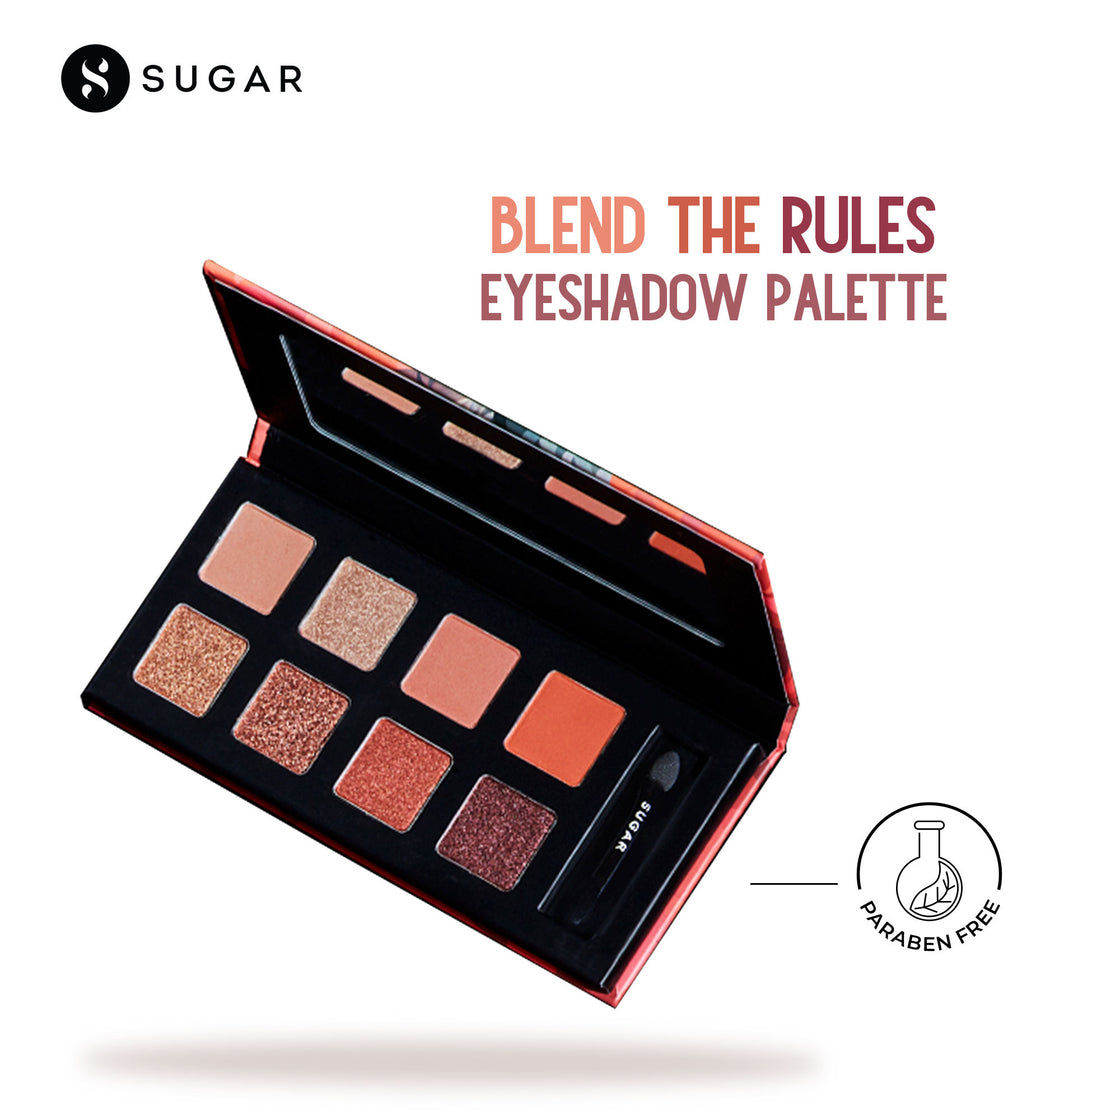 Sugar Blend The Rules Eyeshadow Palette - 01 Flawless